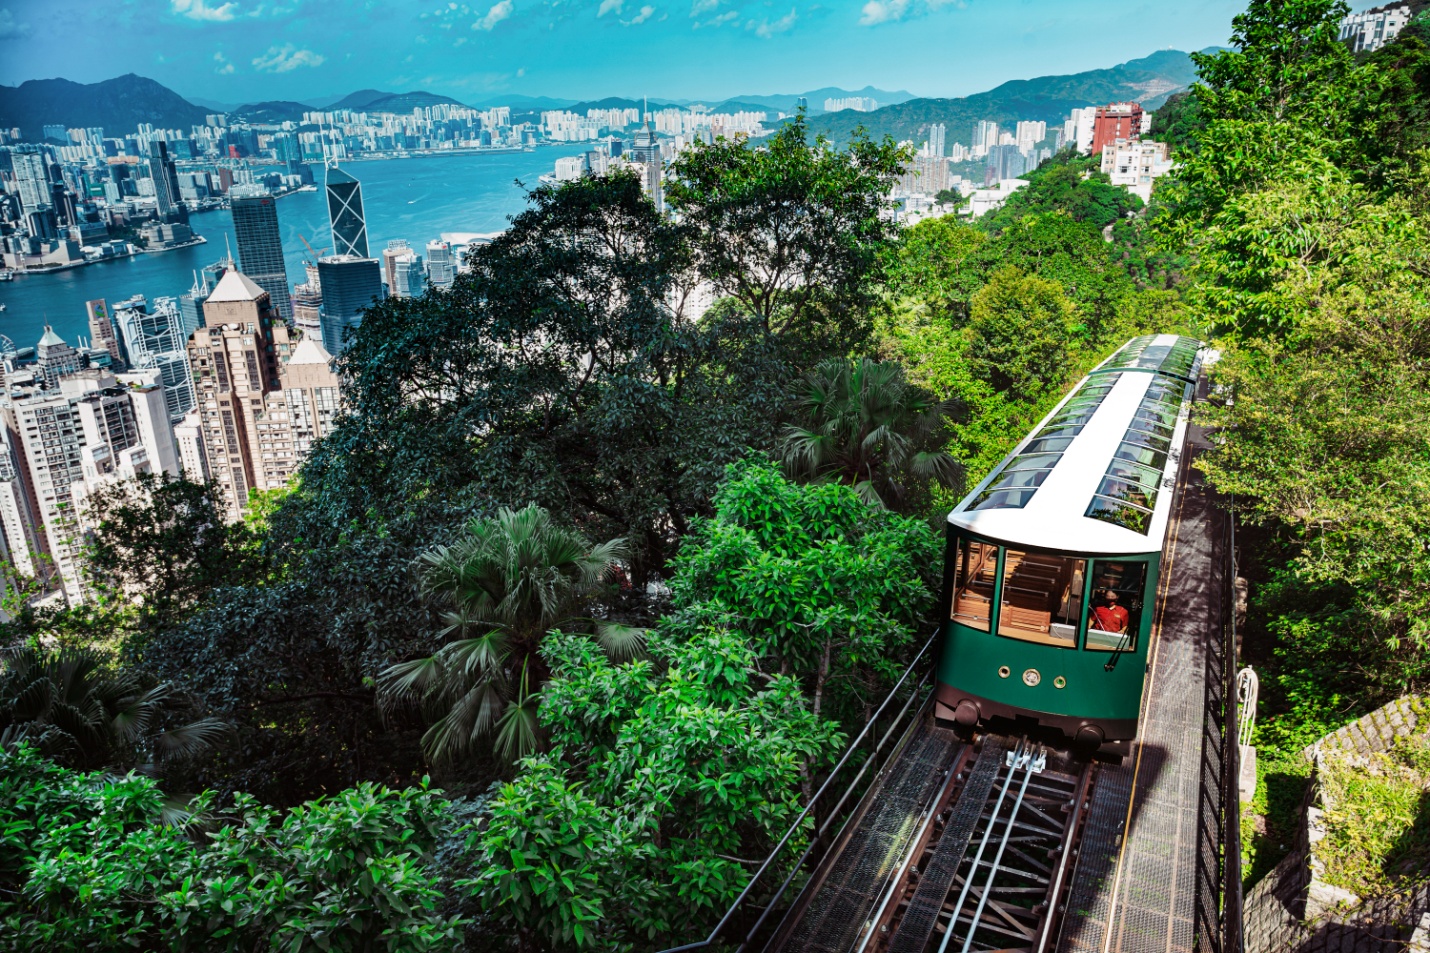 C:\Users\GCPI-ROBBY\Desktop\PRS\Hong Kong 2022-New Experiences-The Peak Tram-01.jpg